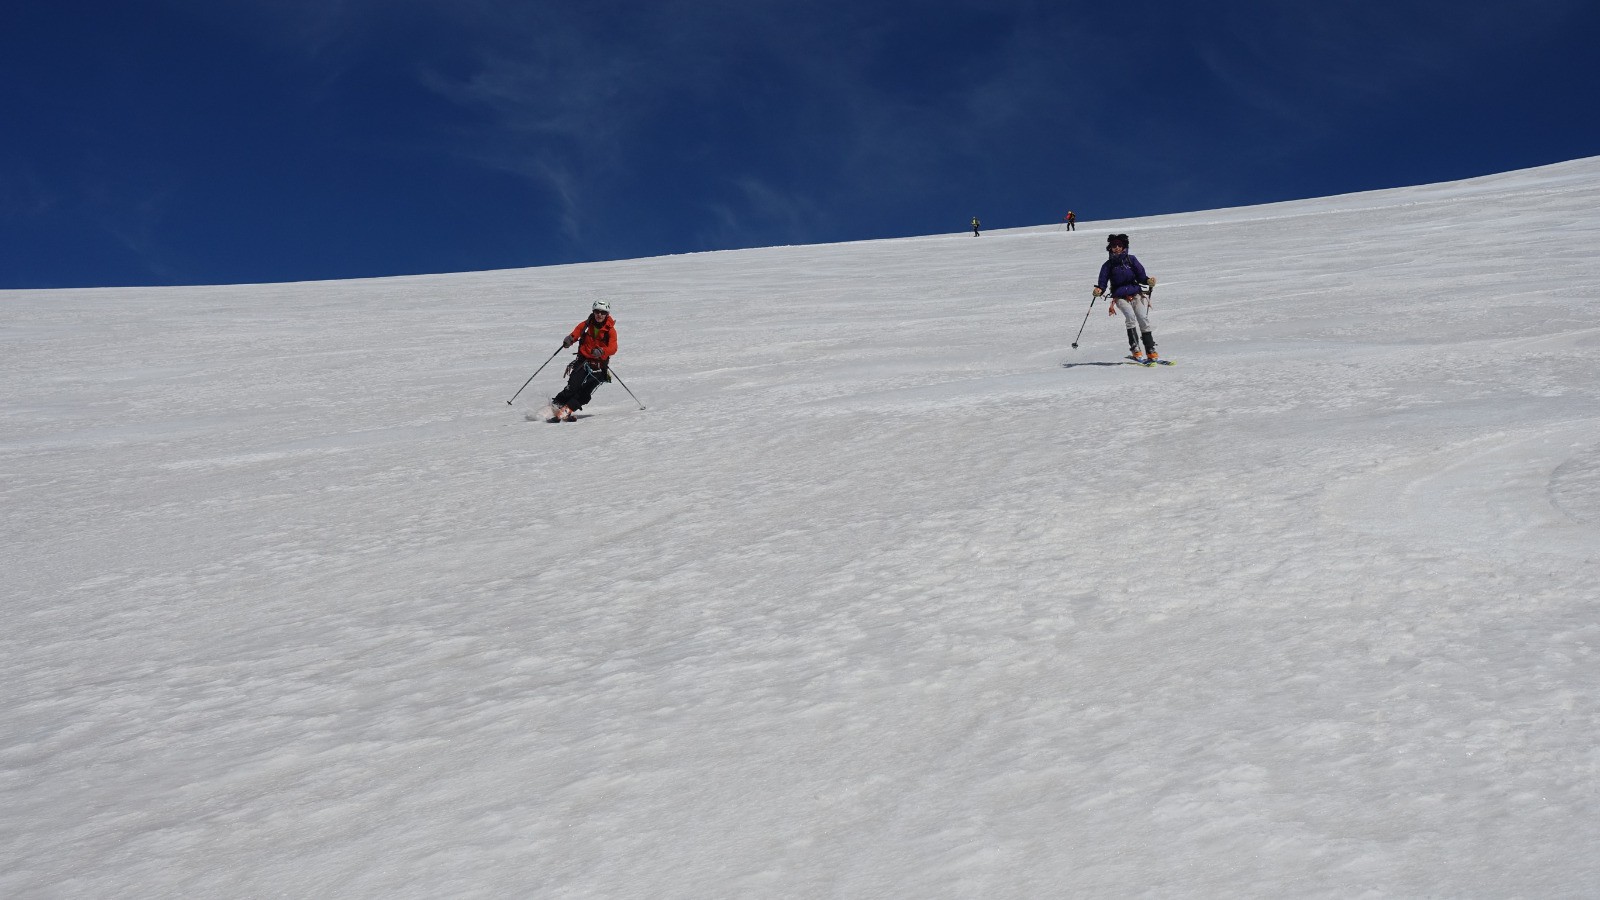 Toujours du bon ski